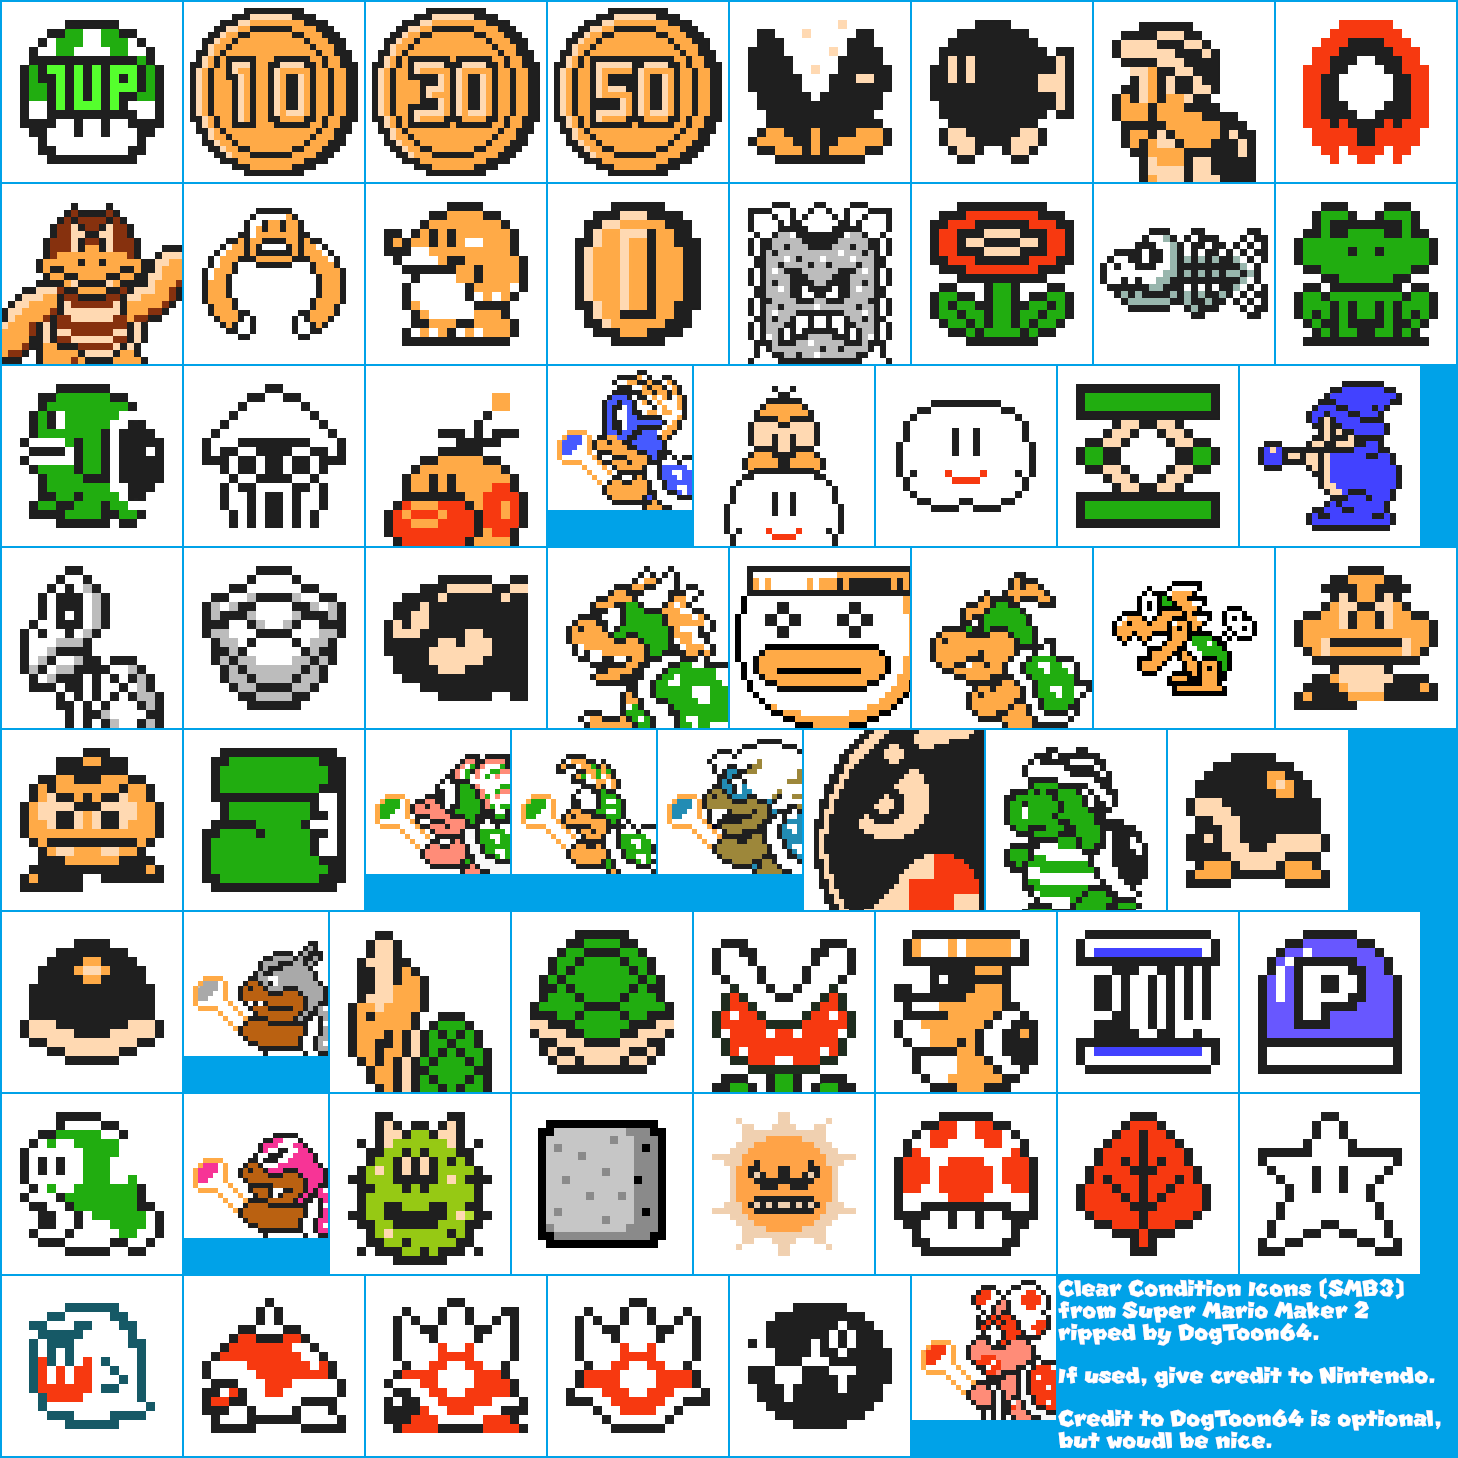 Super Mario Maker 2 - Clear Condition Icons (SMB3)